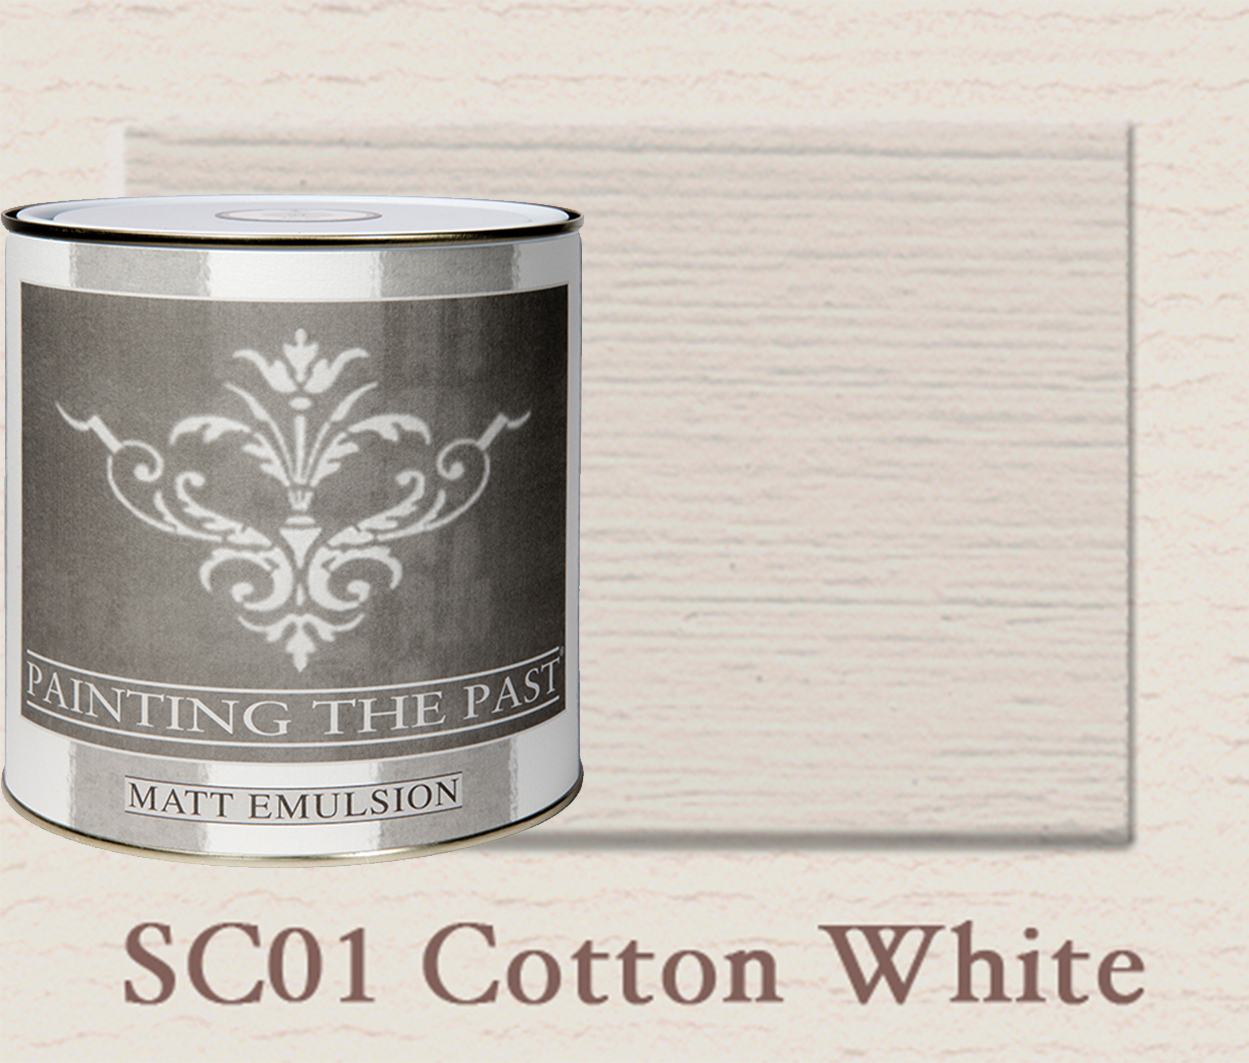 Painting The Past Matt Emulsion Cotton White